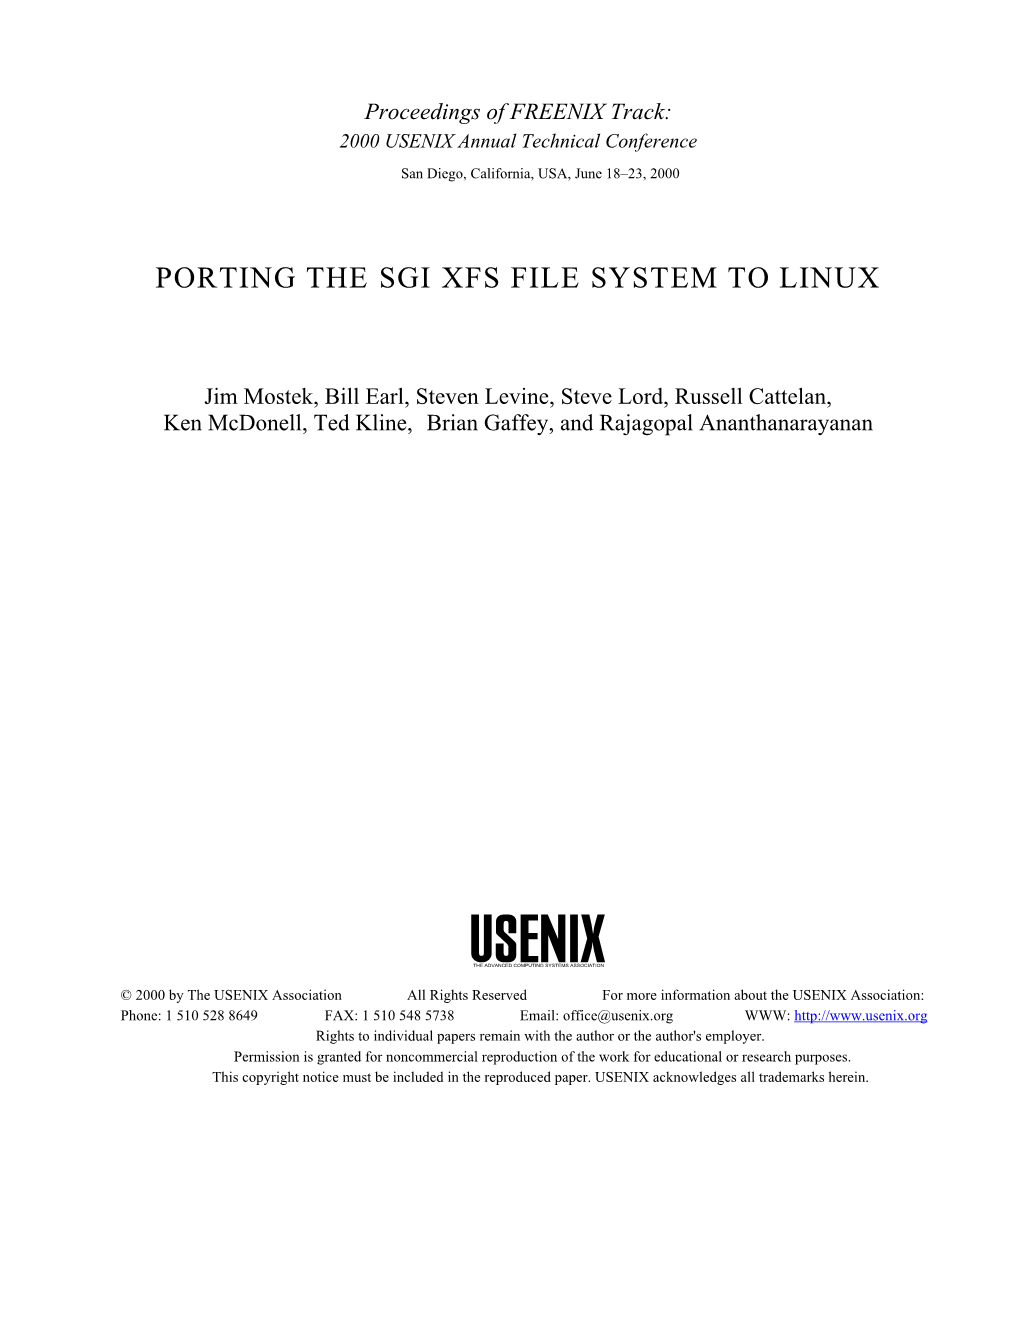 Page 1 Proceedings of FREENIX Track: 2000 USENIX Annual